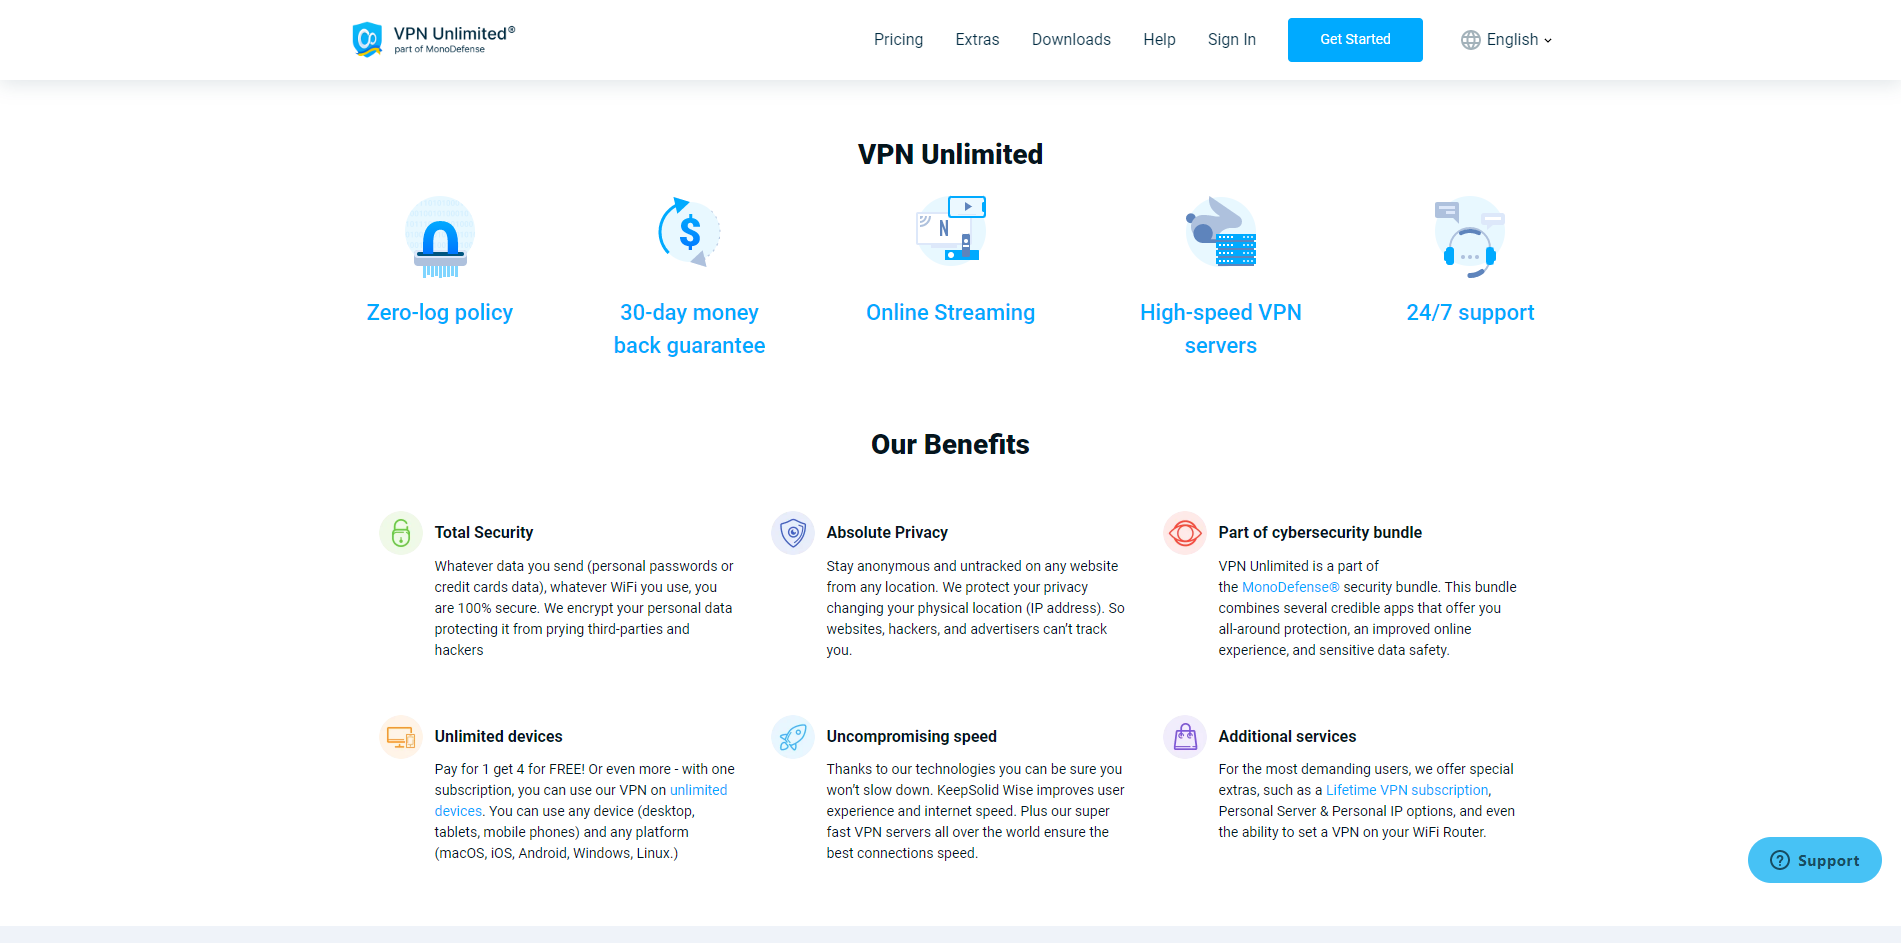 KeepSolid VPN Unlimited